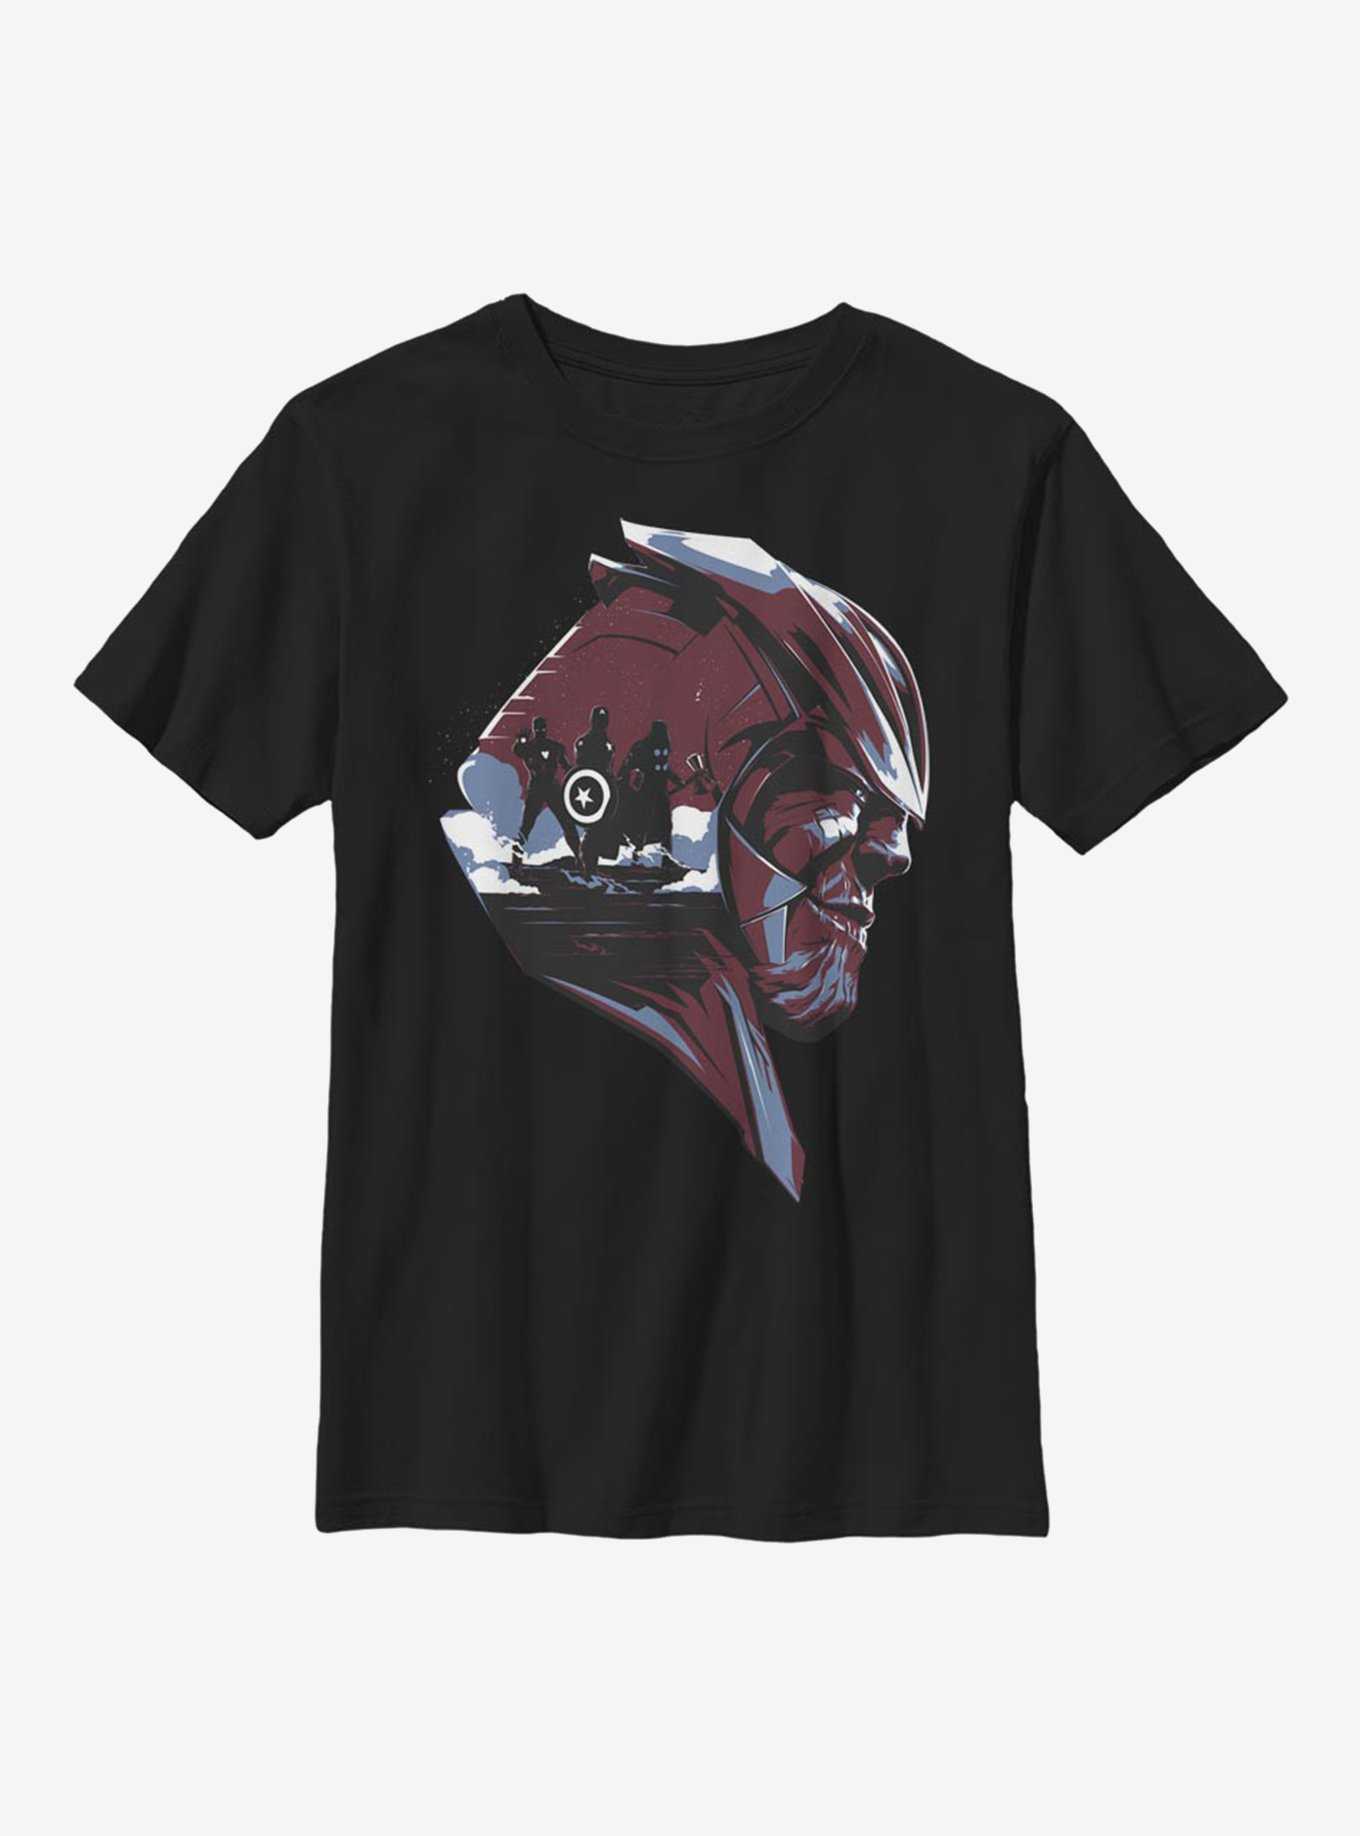 Marvel Avengers Thanos Youth T-Shirt, , hi-res